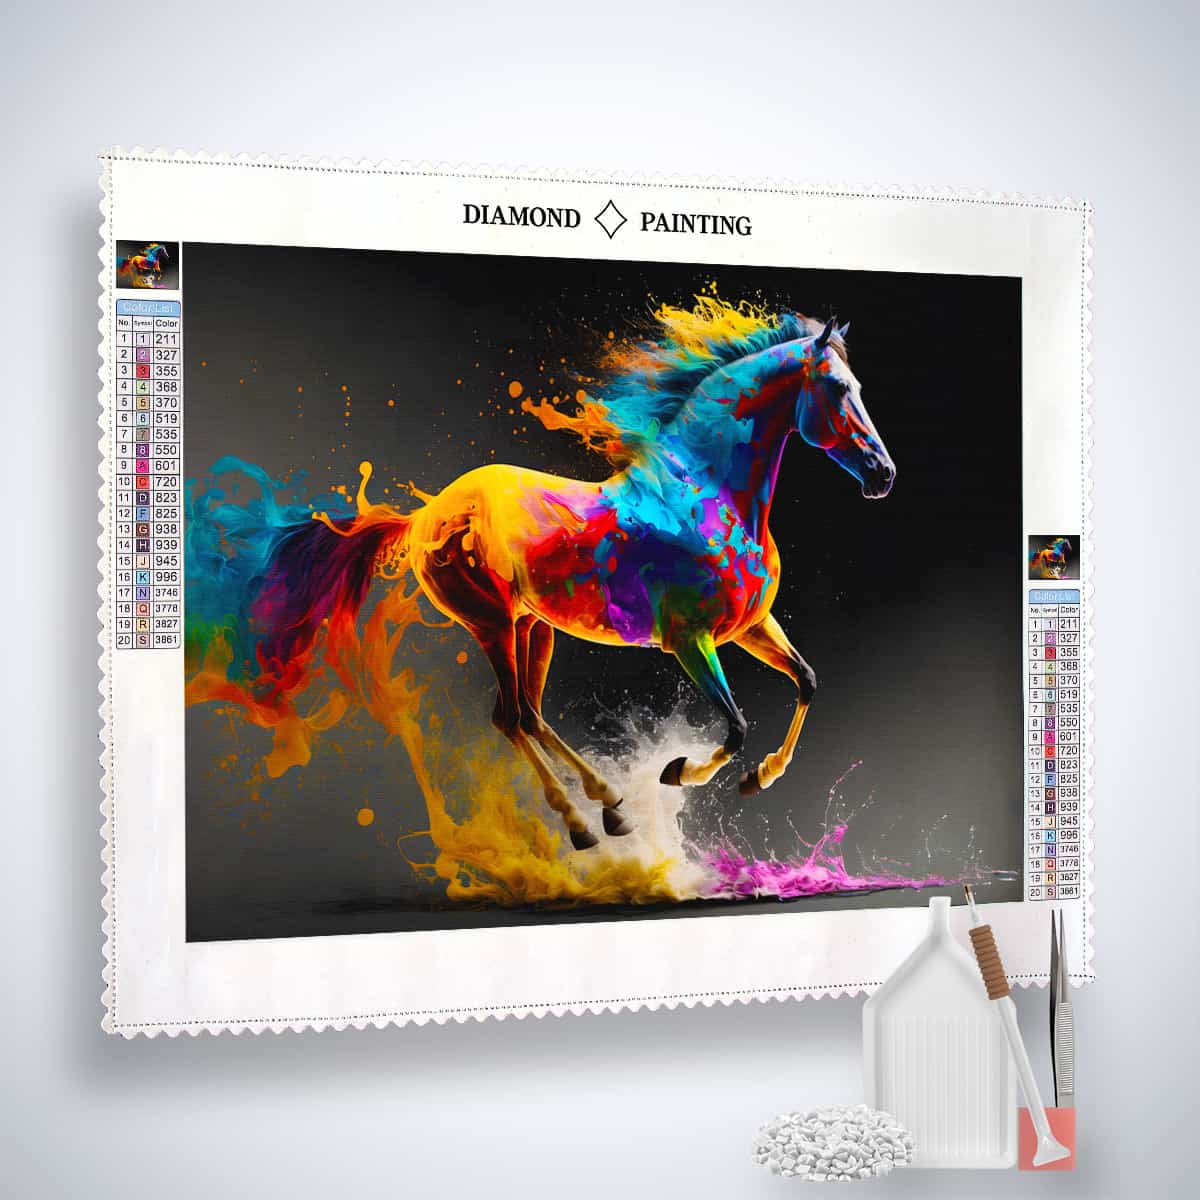 AB Diamond Painting - Farbenfrohes Pferd - gedruckt in Ultra-HD - AB Diamond, Horizontal, Neu eingetroffen, pferd, Tiere